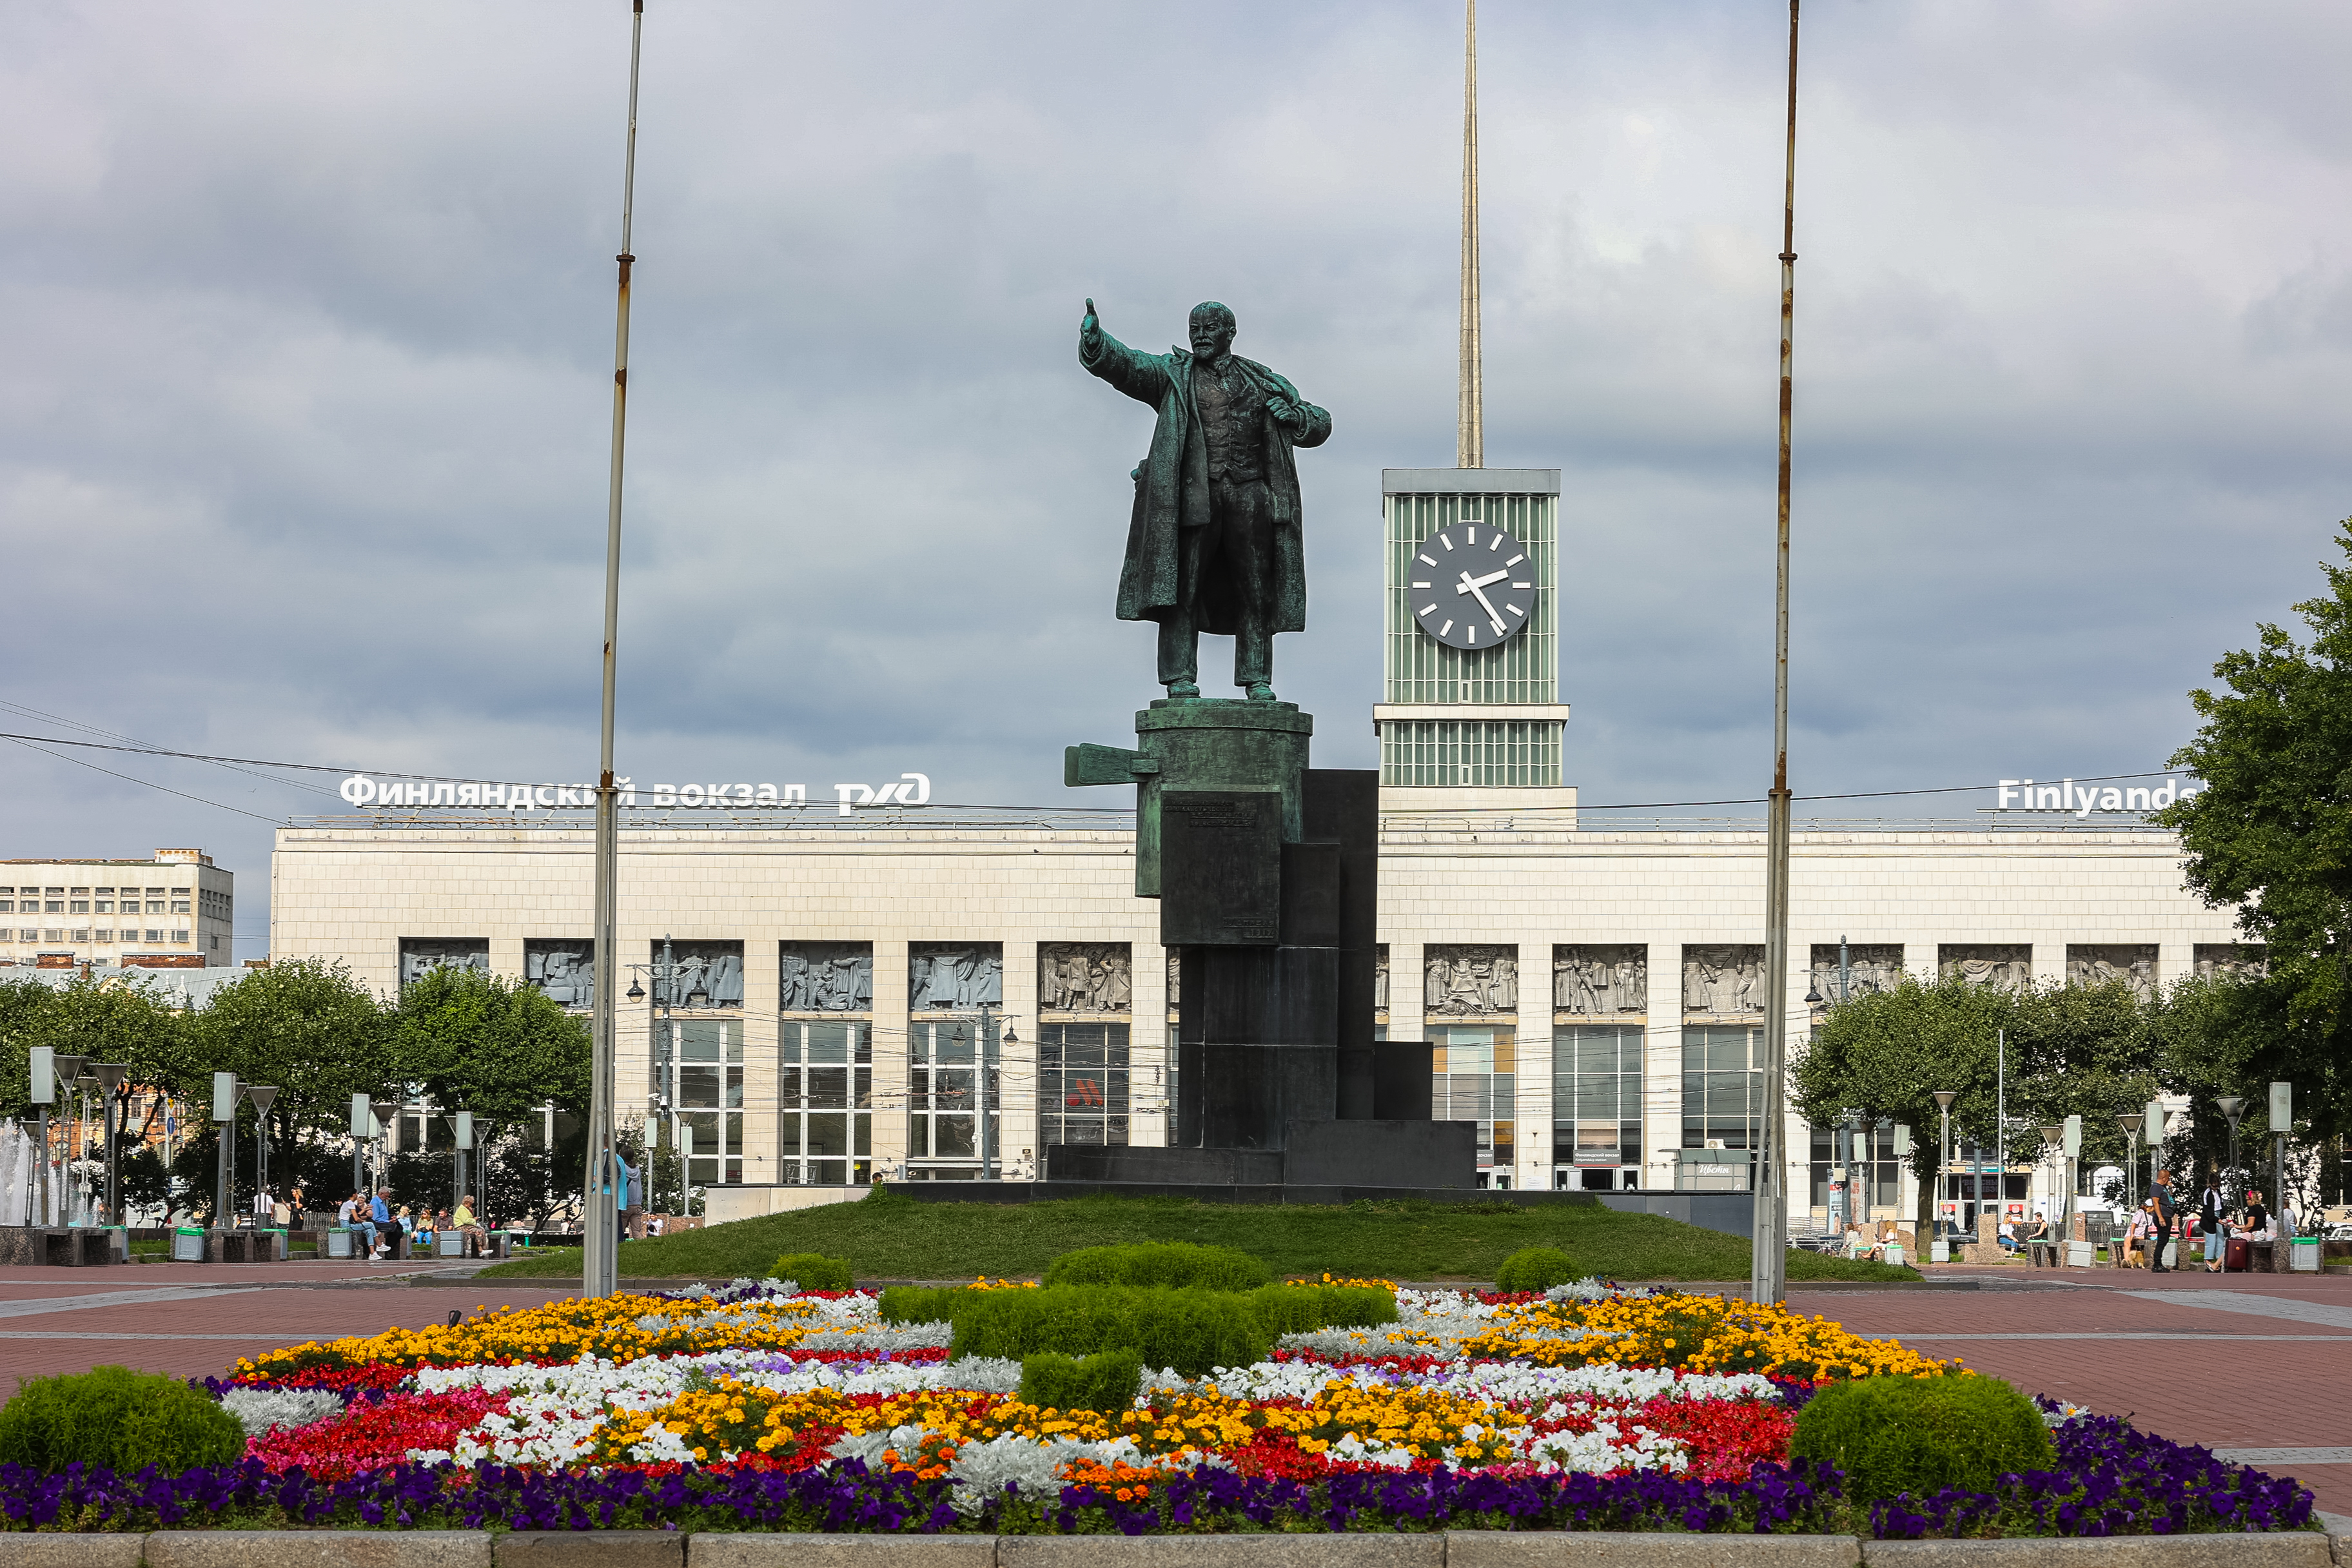 Finlyandsky railway station